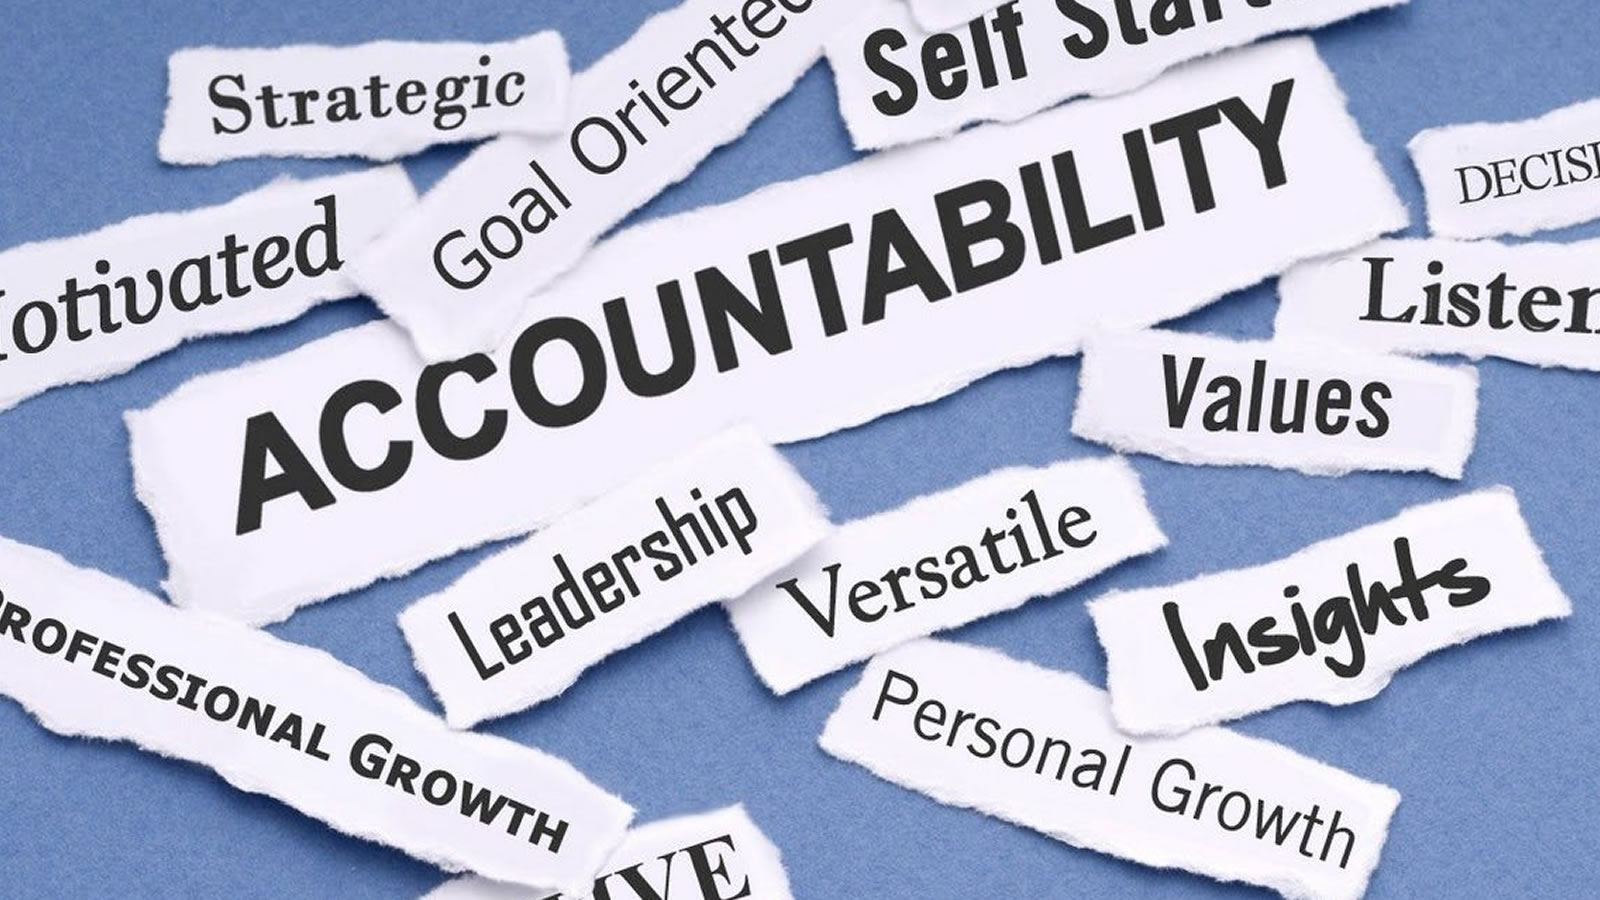 Accountability: Aprendiendo a decir “No”